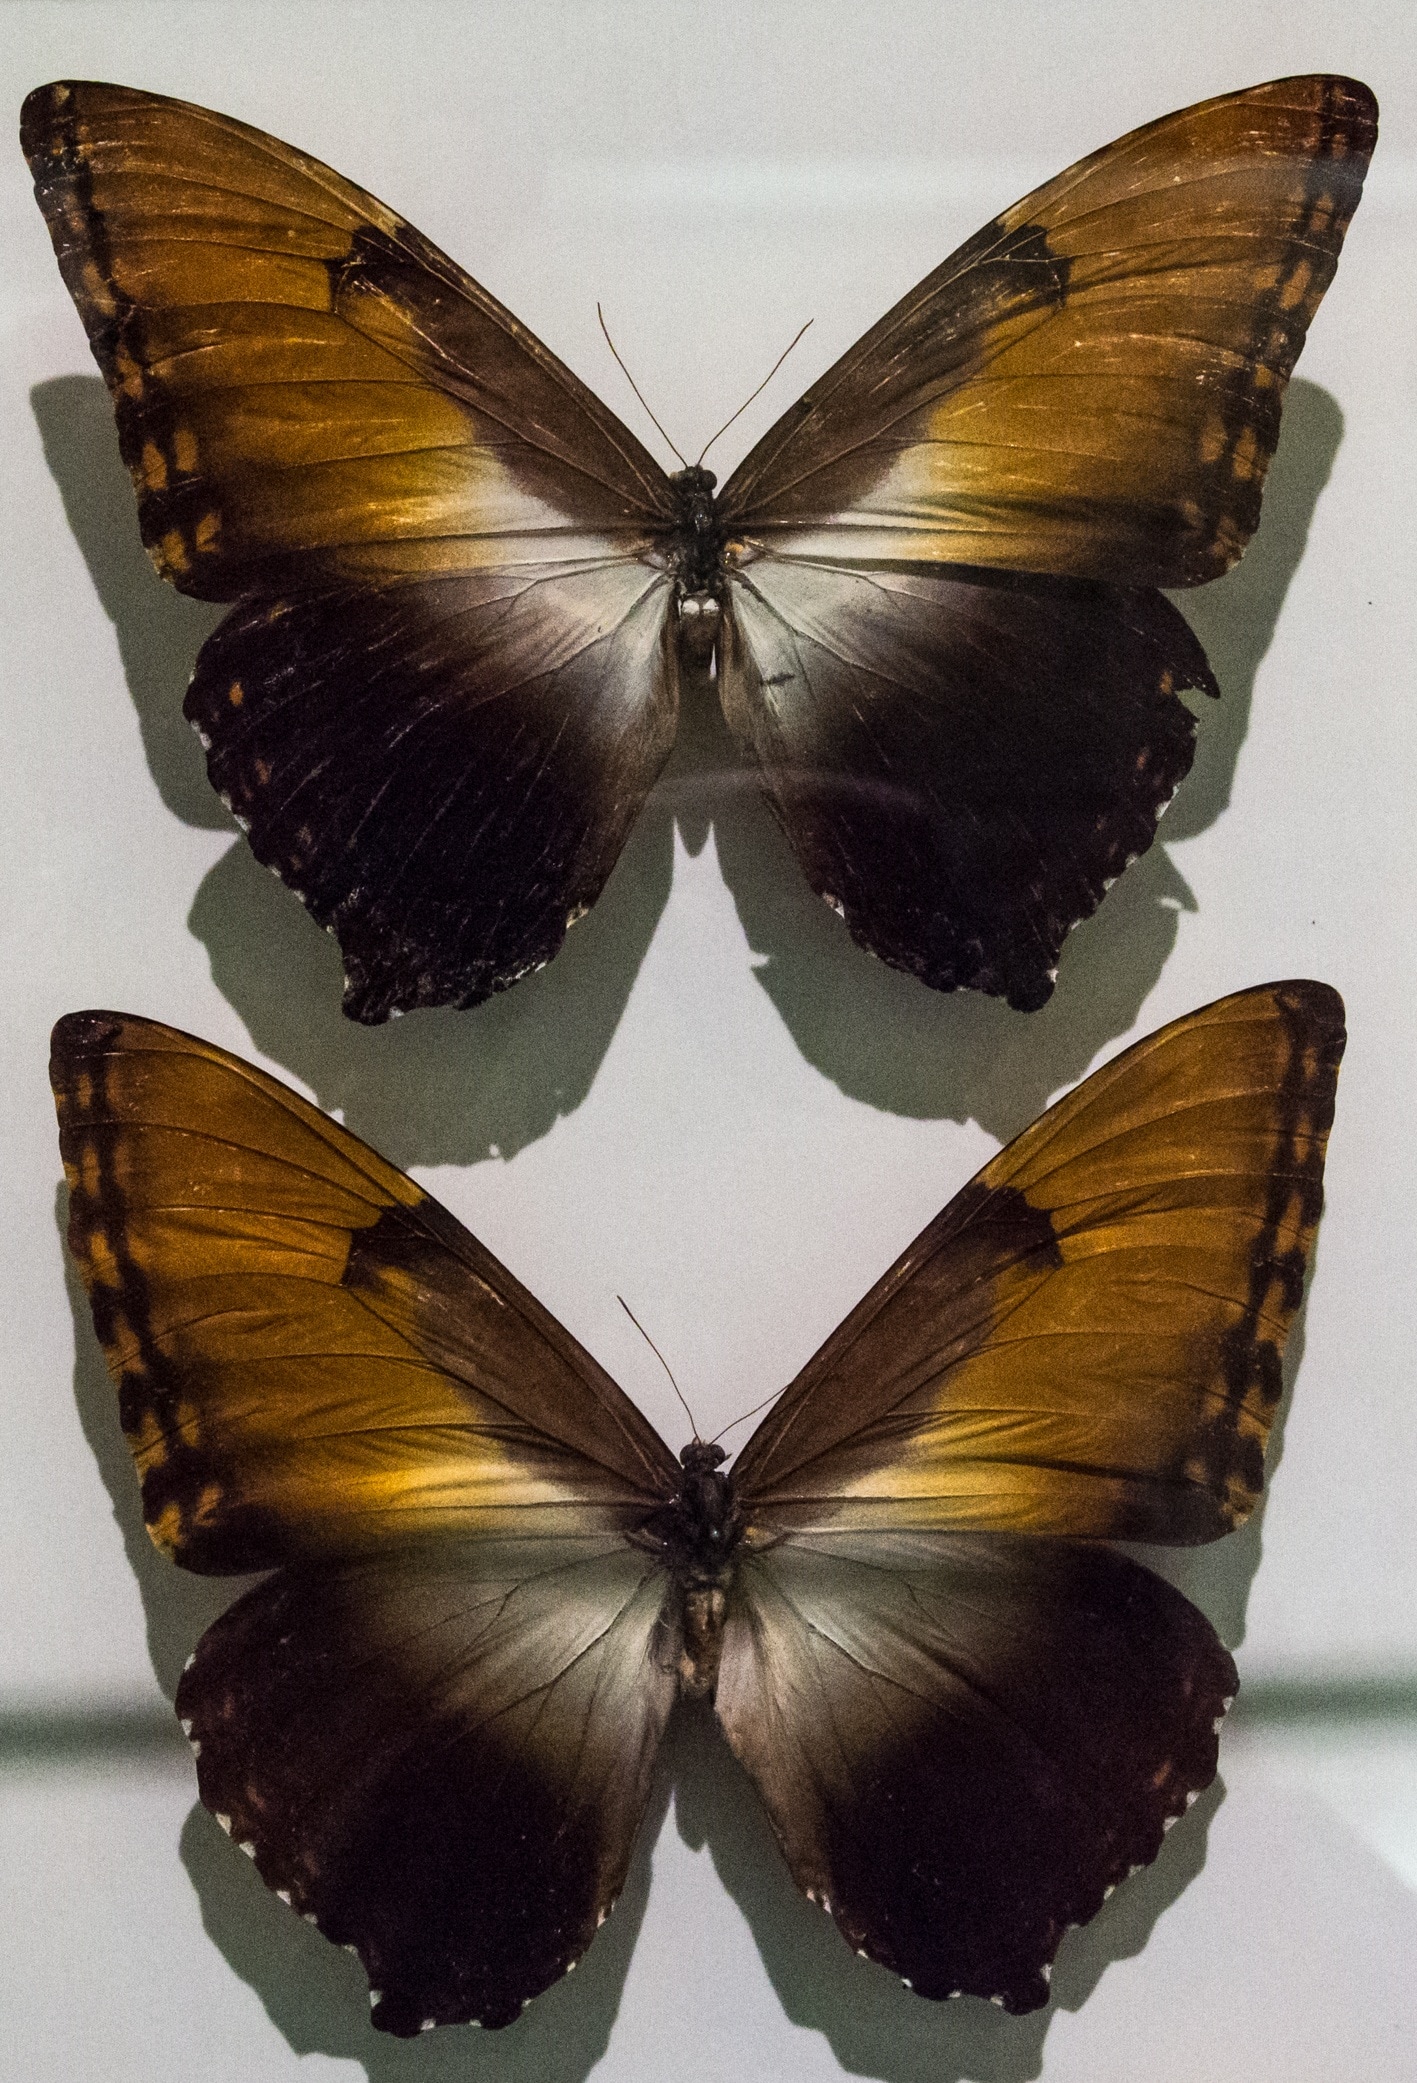 2 brown and black moths